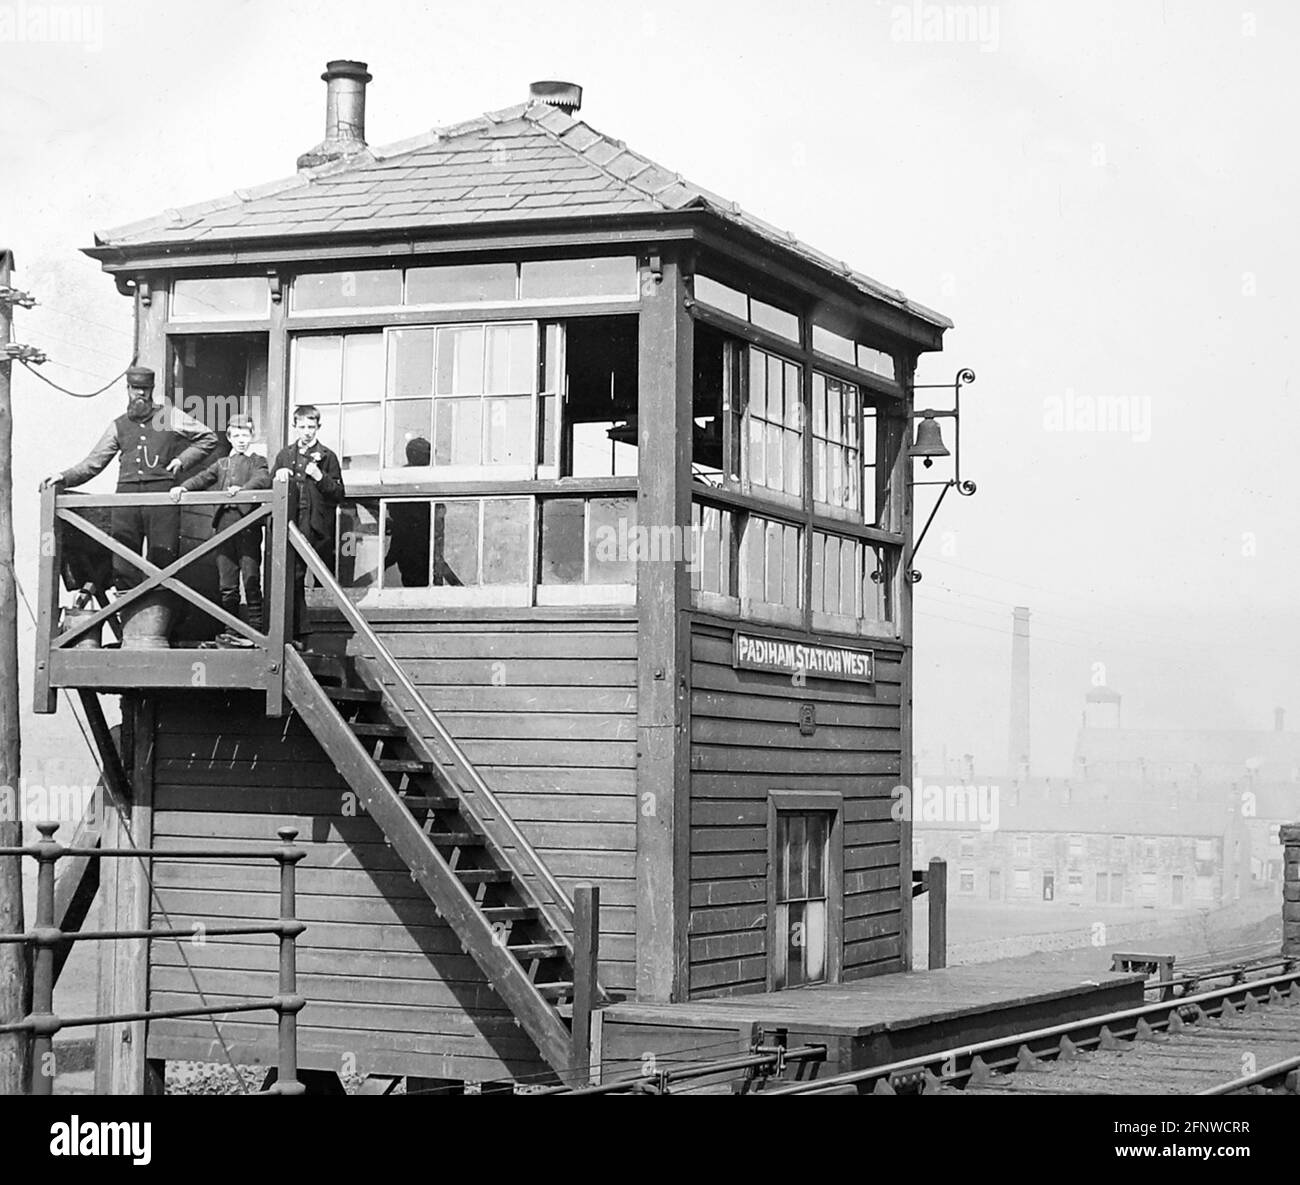 Padiham West Signal Box on the Lancashire and Yorkshire Railway, Victorian period Stock Photo